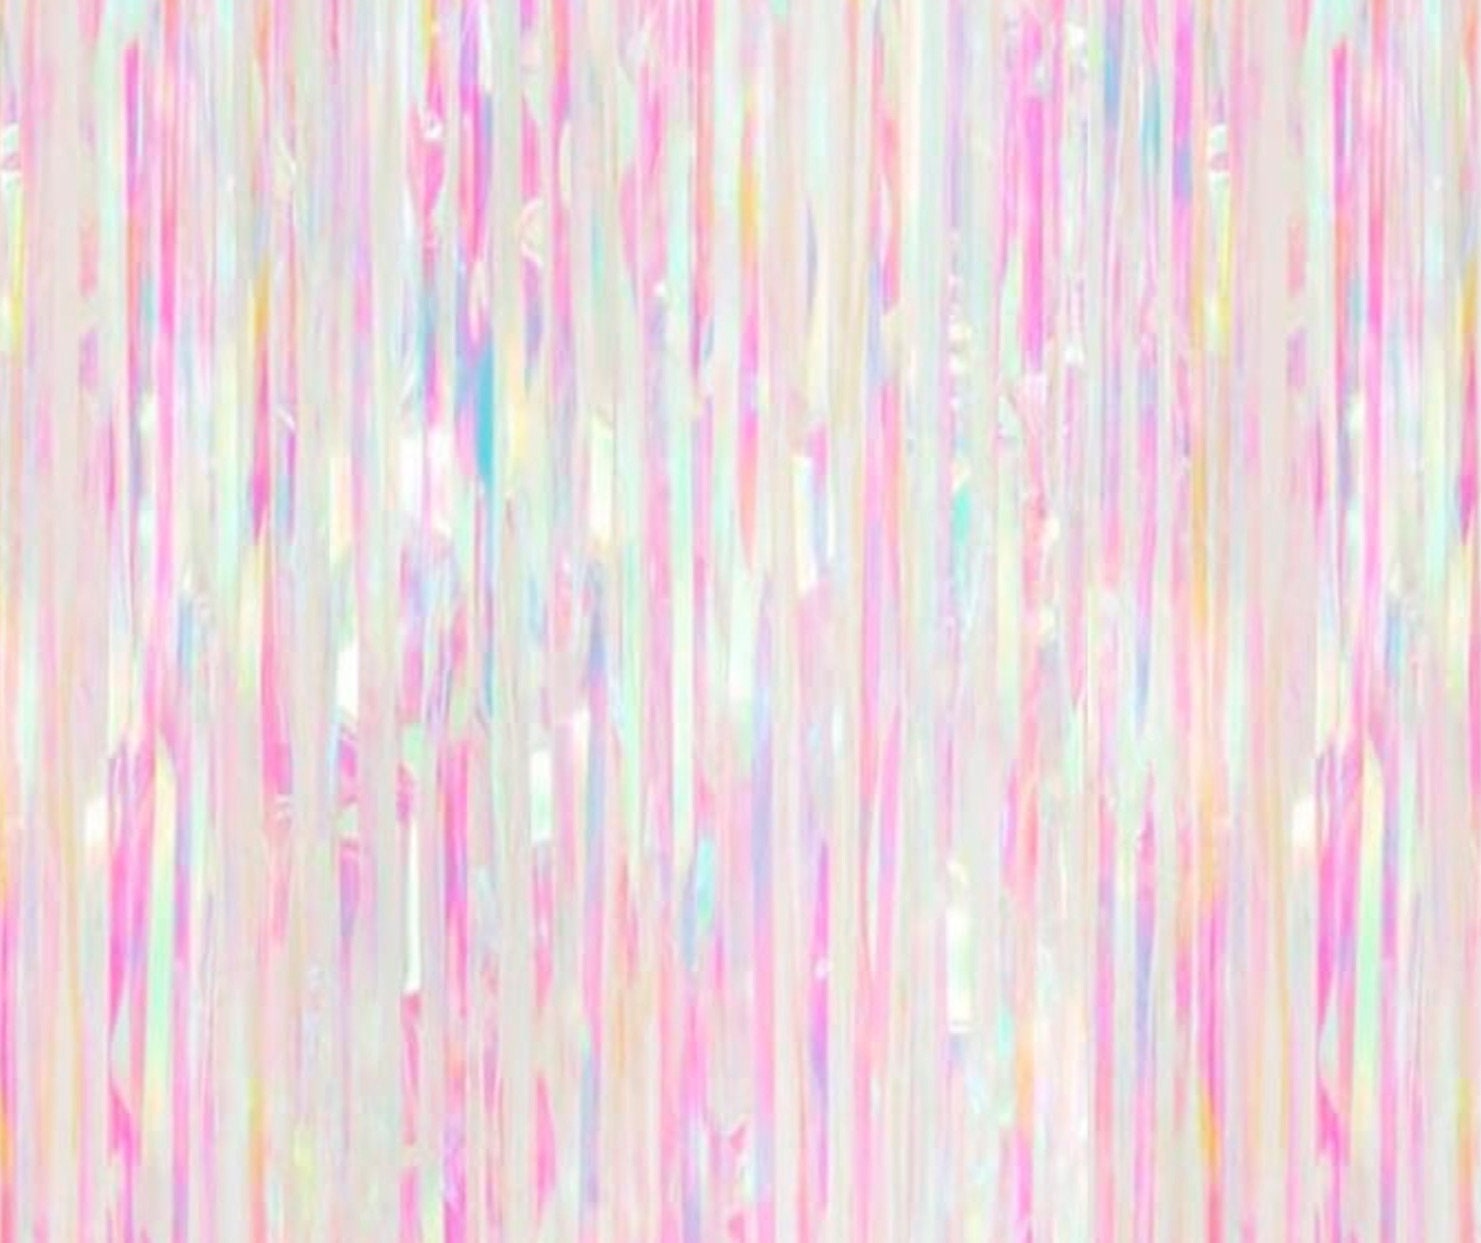 Decoración de cortina metálica Matt Pink Foil Fringe, Decoraciones